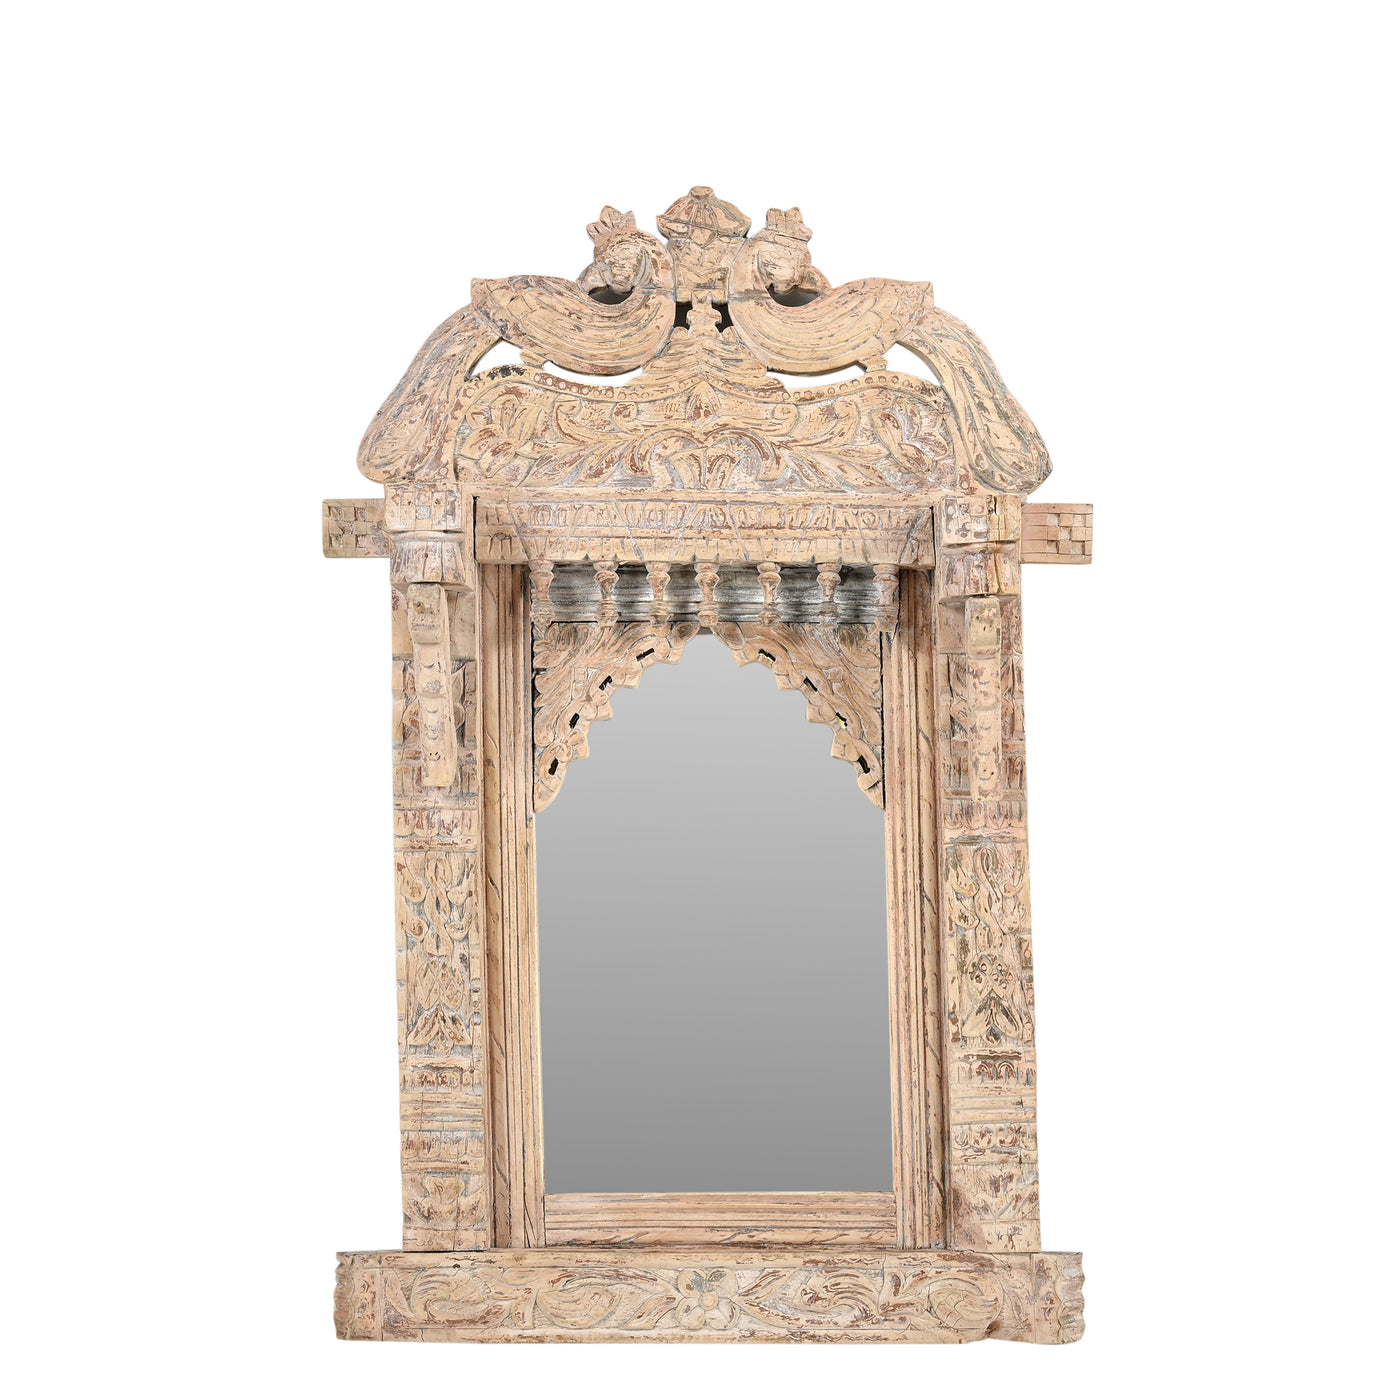 Jharokha - carved wooden mirror